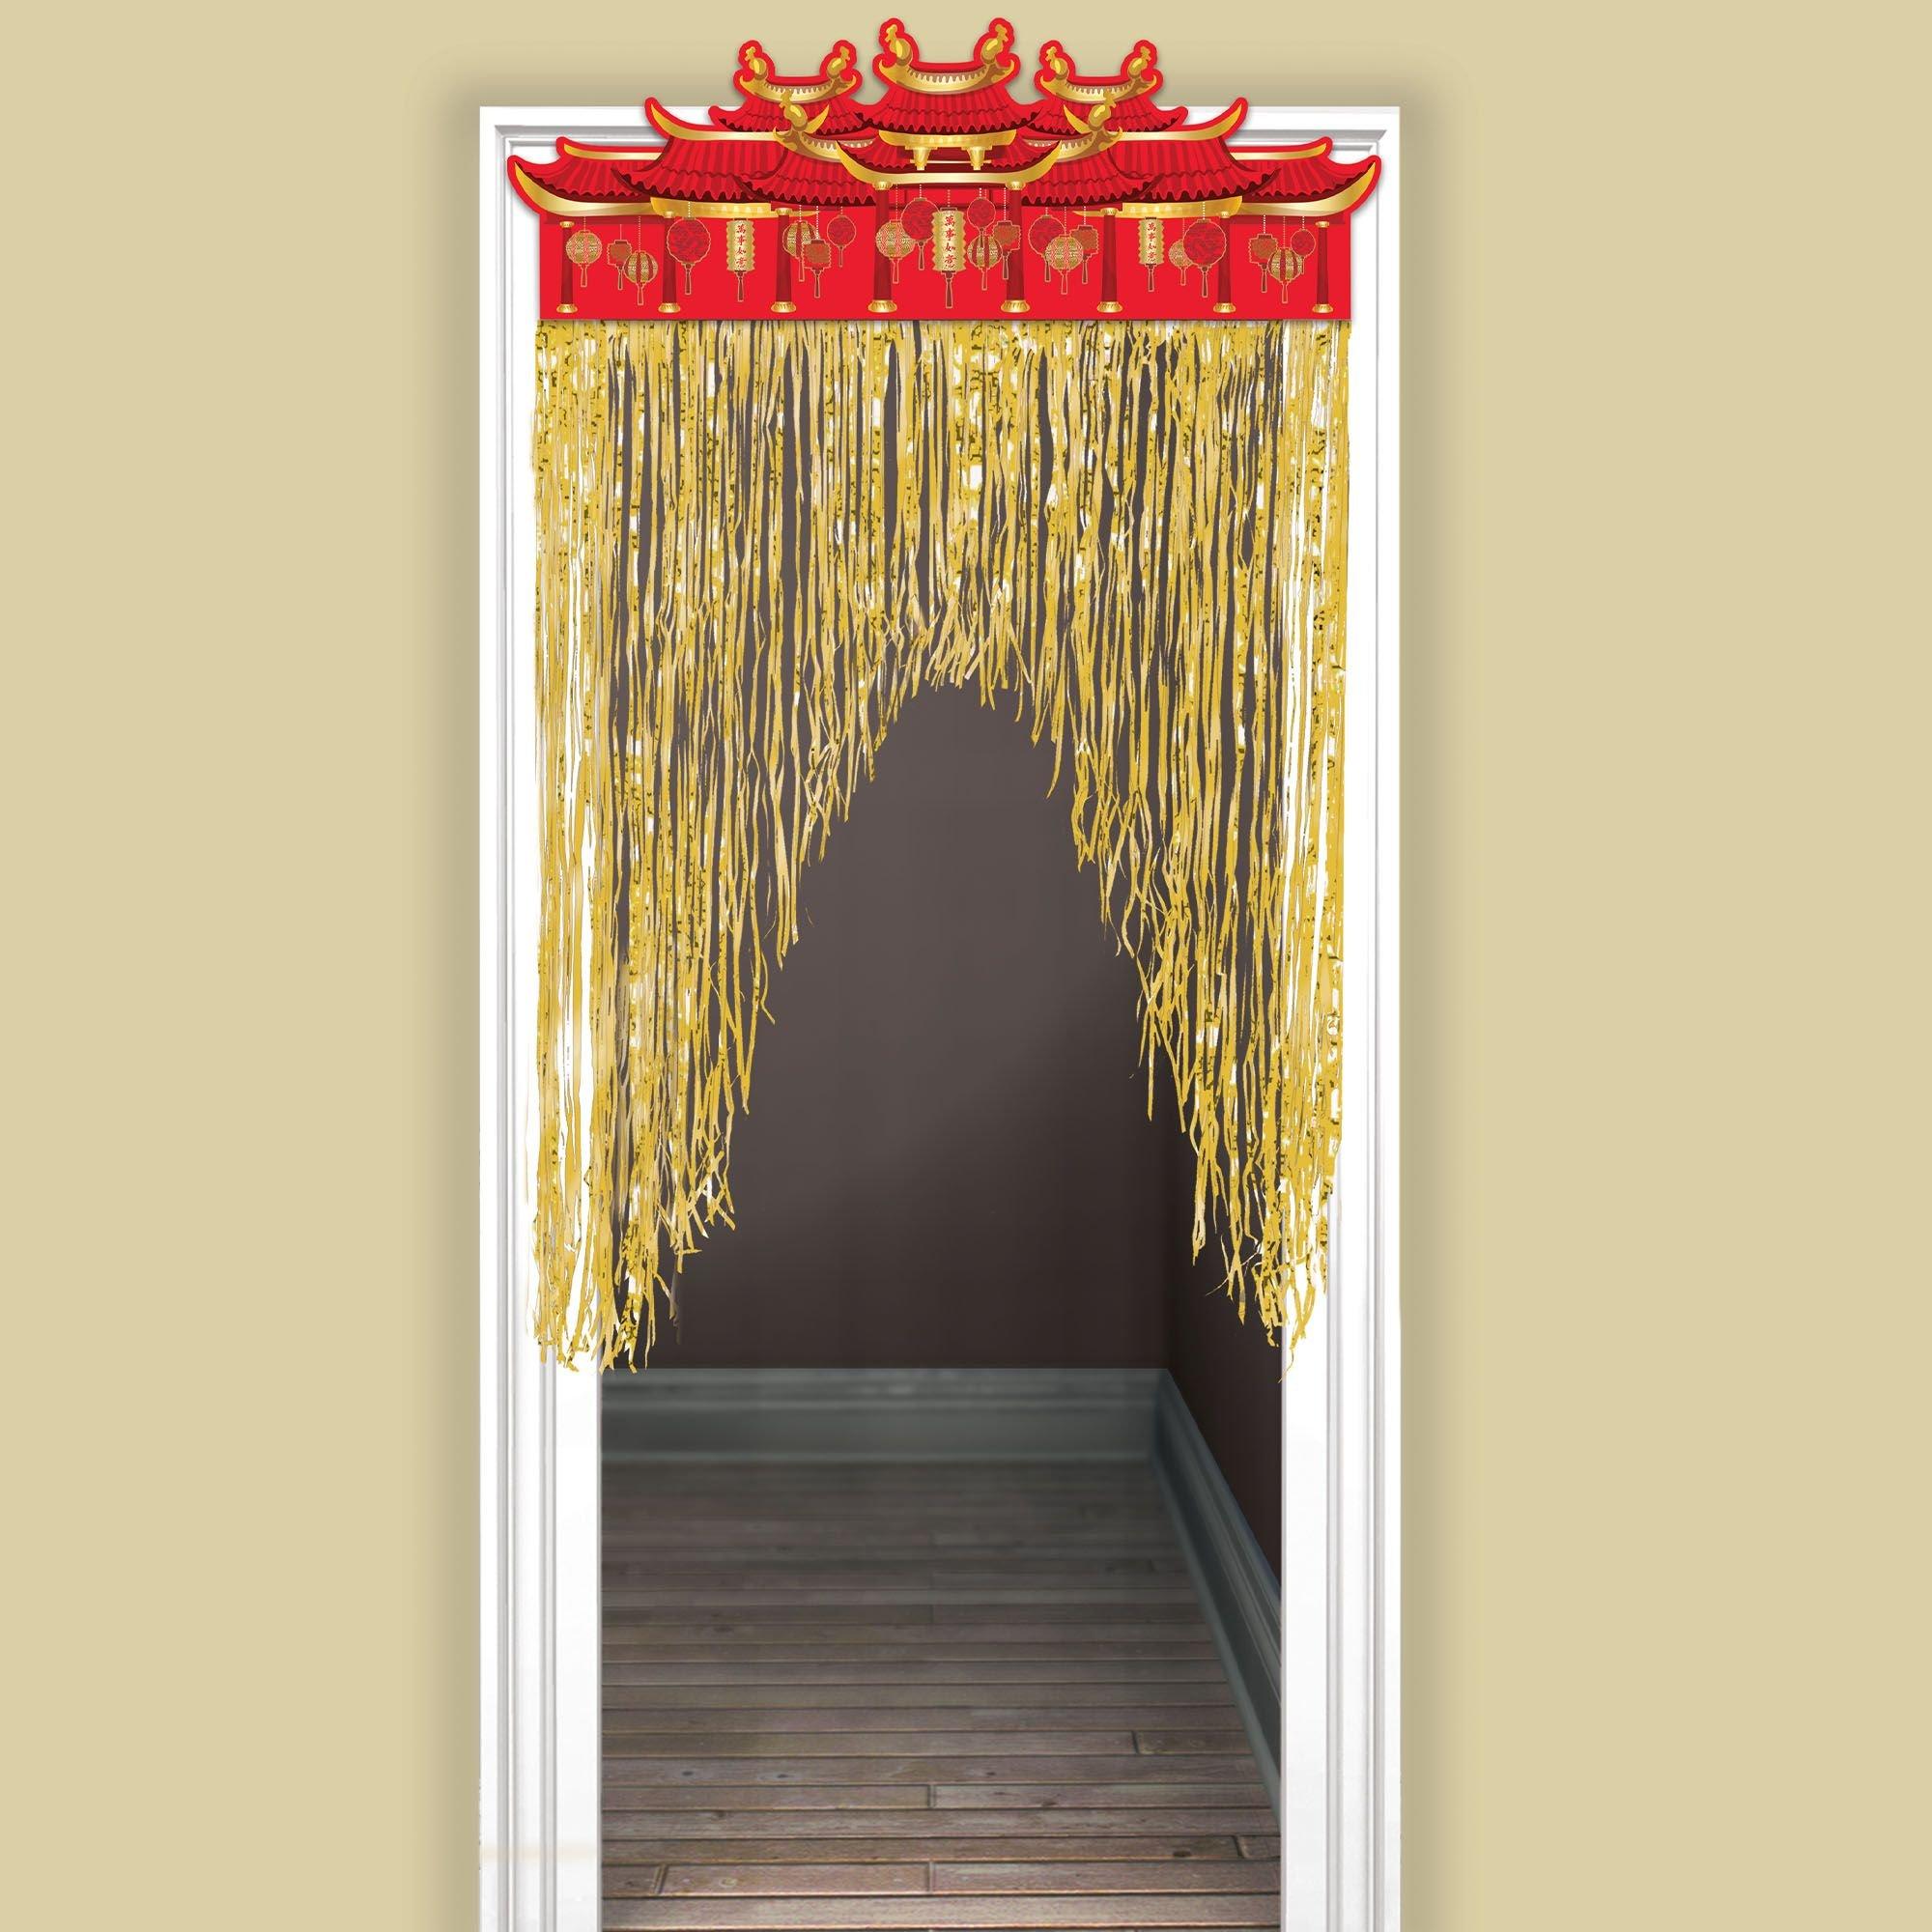 Chinese New Year Hanging Swirl Decorations 12ct